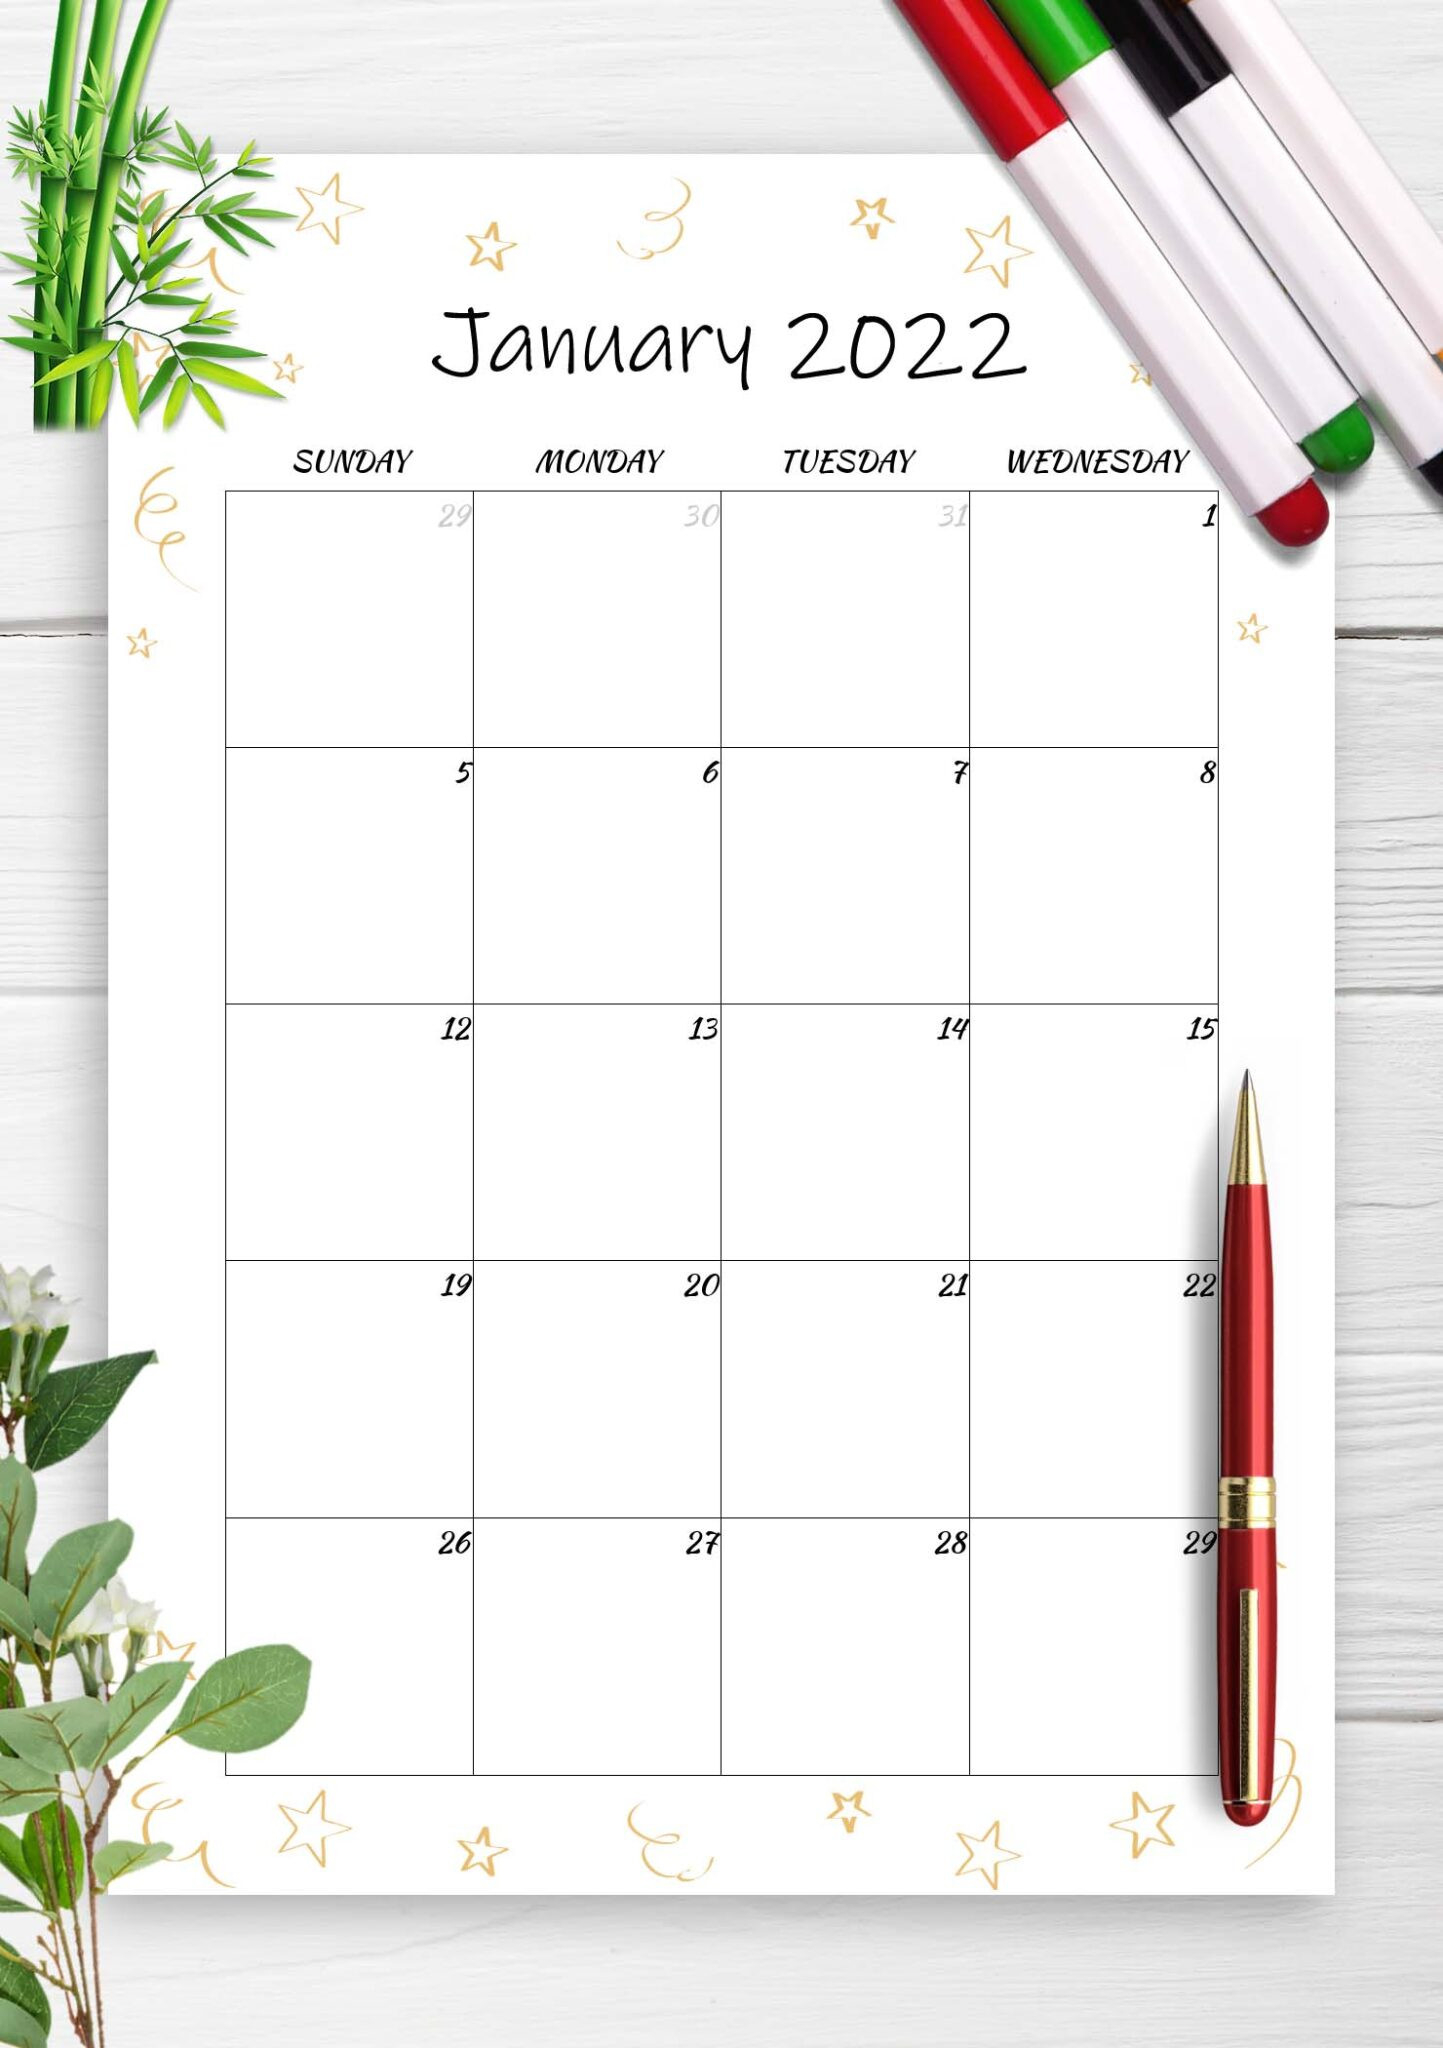 Blank Printable Calendar January 2022 With Holidays Template  January February March April 2022 Calendar